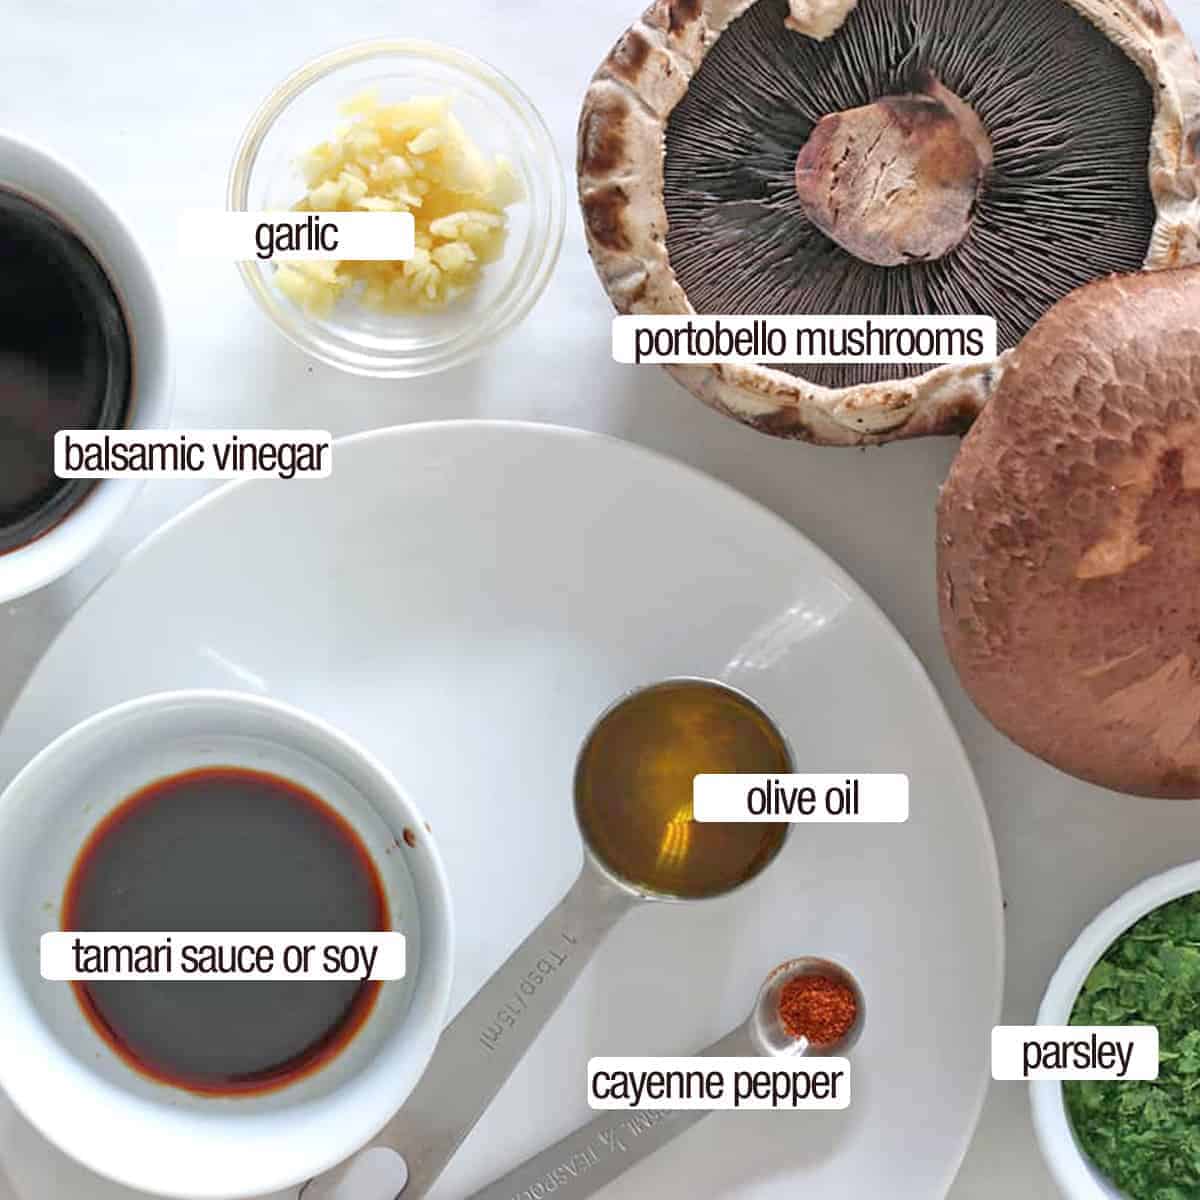 grilled portobello mushrooms ingredients.